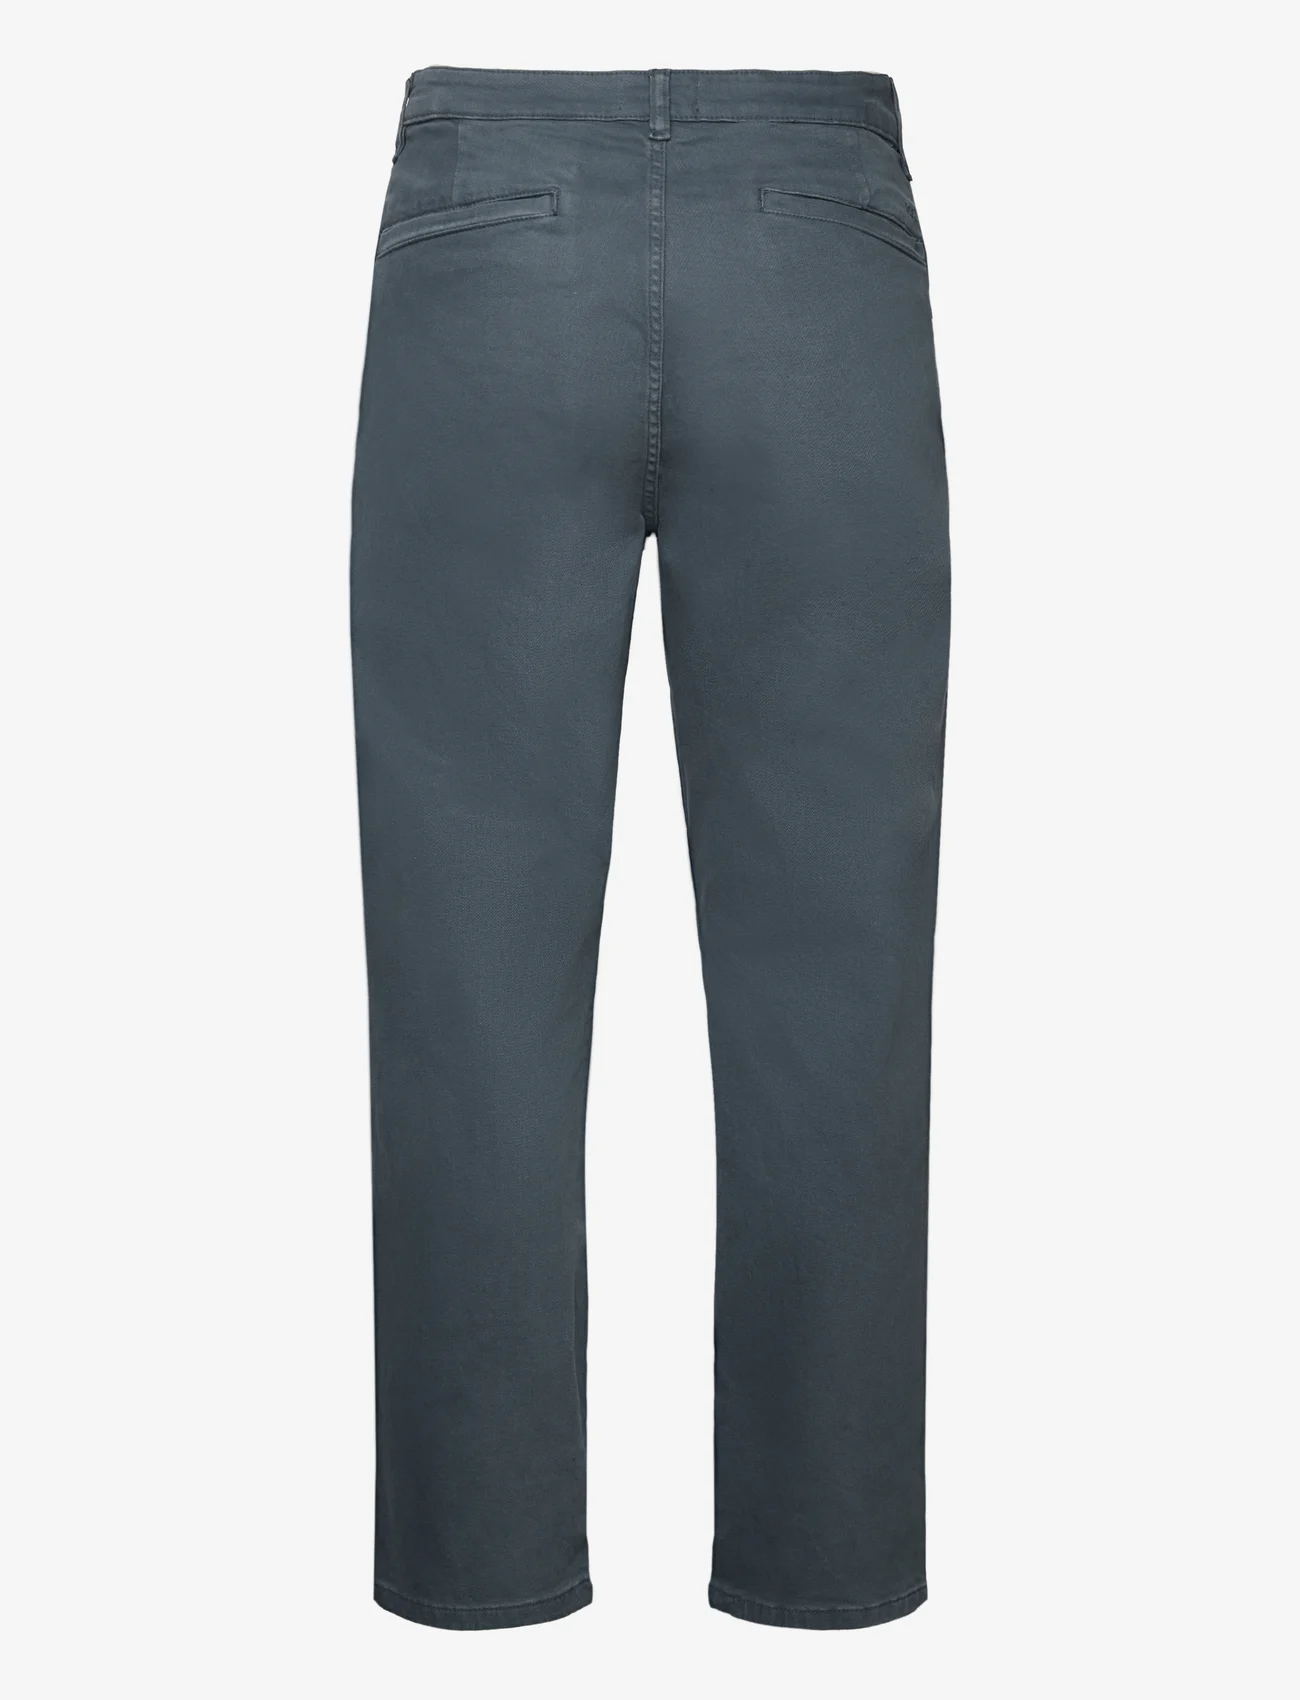 Denim project - DPChino Recycled Pants - chino stila bikses - orion blue - 1